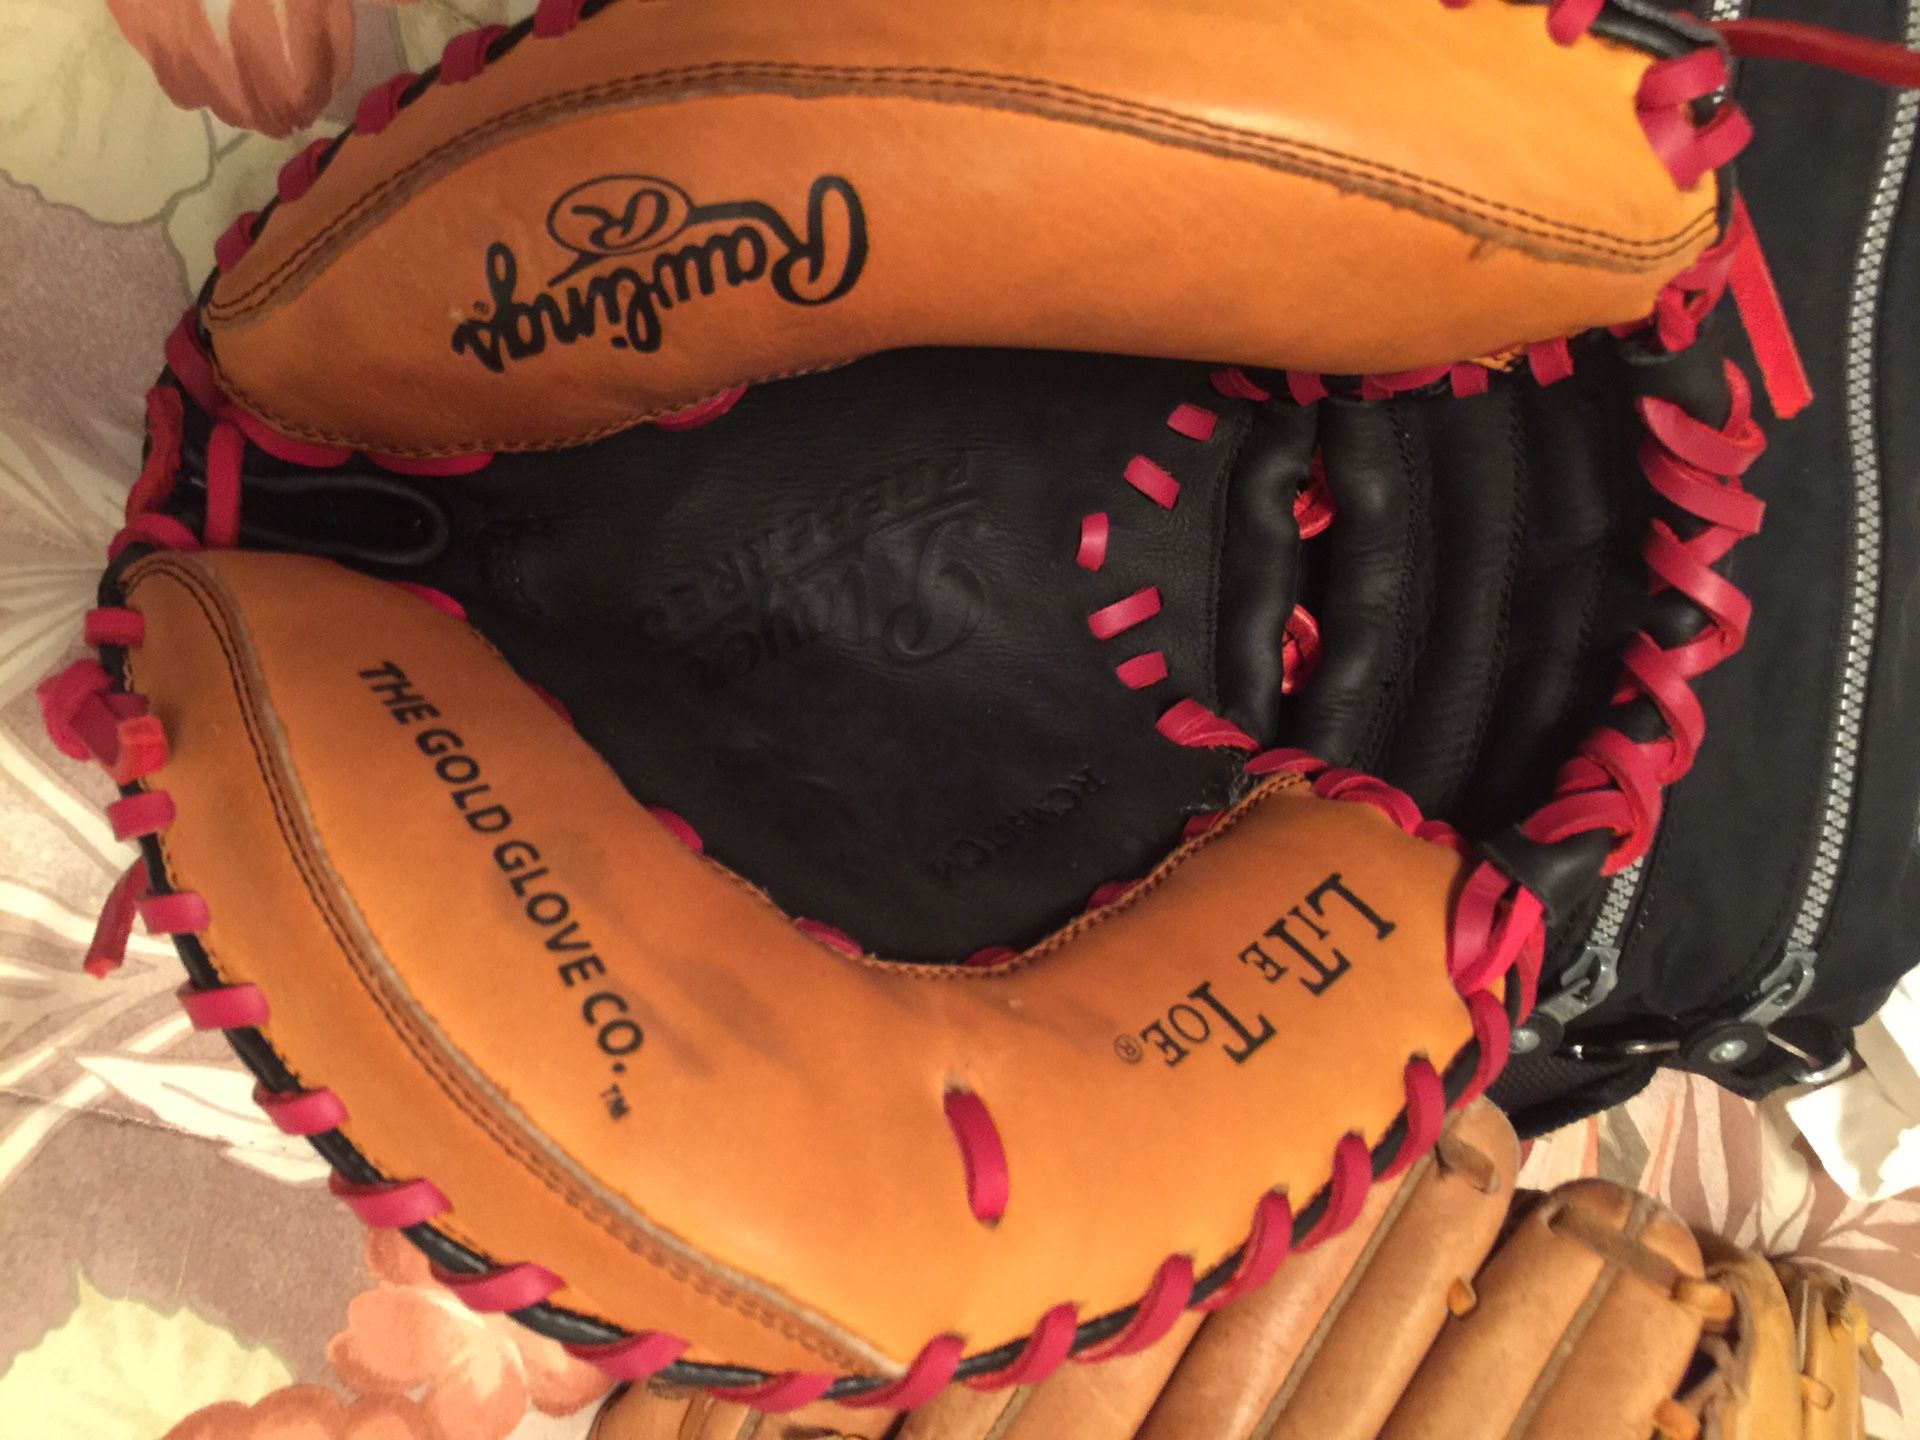 Baseball glove catchers mitt Rawlings small to medium size hand 14-18 years old